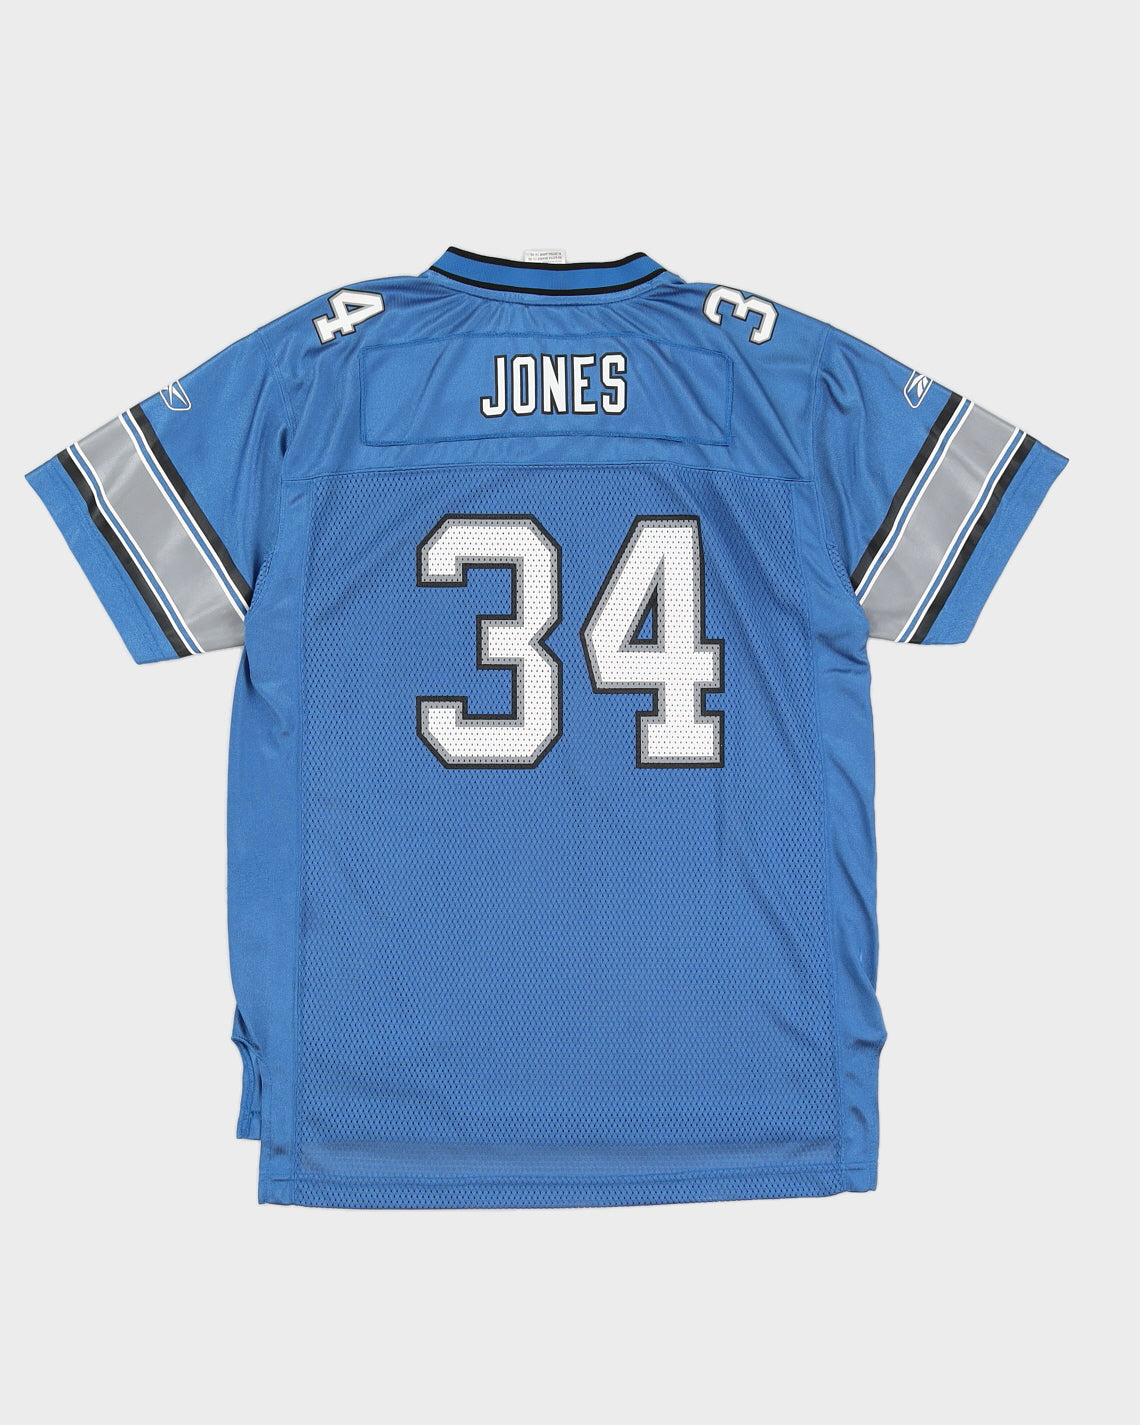 NFL X Reebok Kevin Jones #34 Detroit Lions Jersey - XL